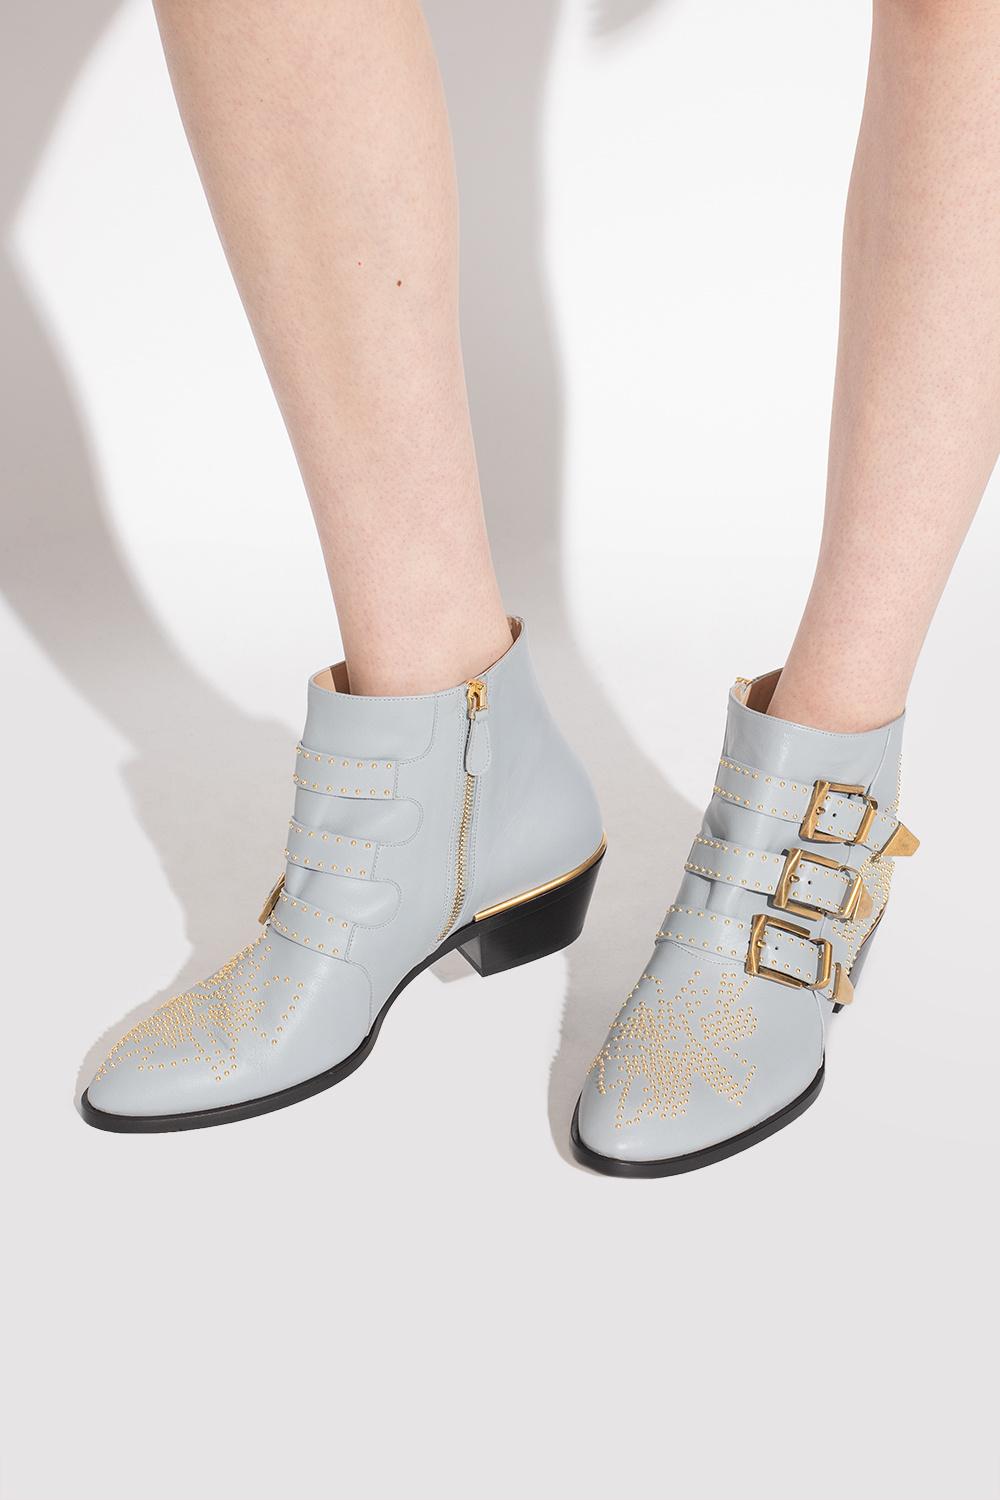 Chloé 'susanna' Leather Boots White |